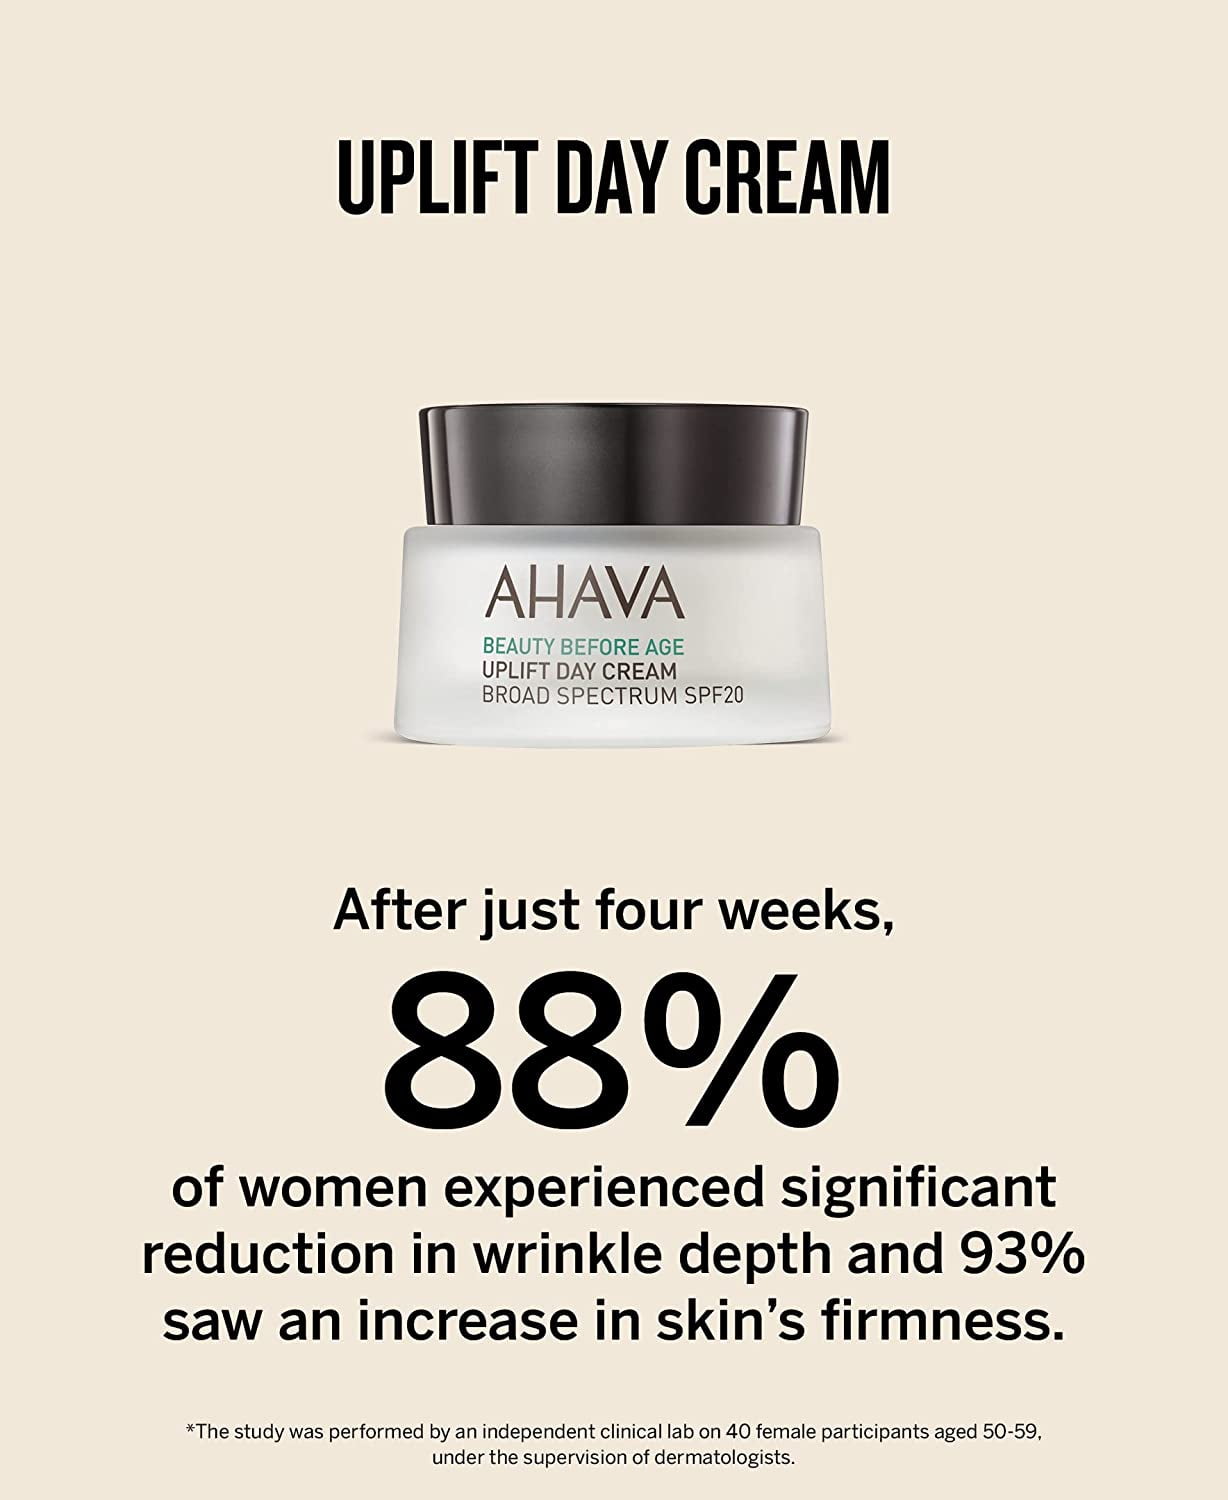 AHAVA - Beauty Before Age oz. SPF20 Day 1.7 Broad Cream Uplift Spectrum